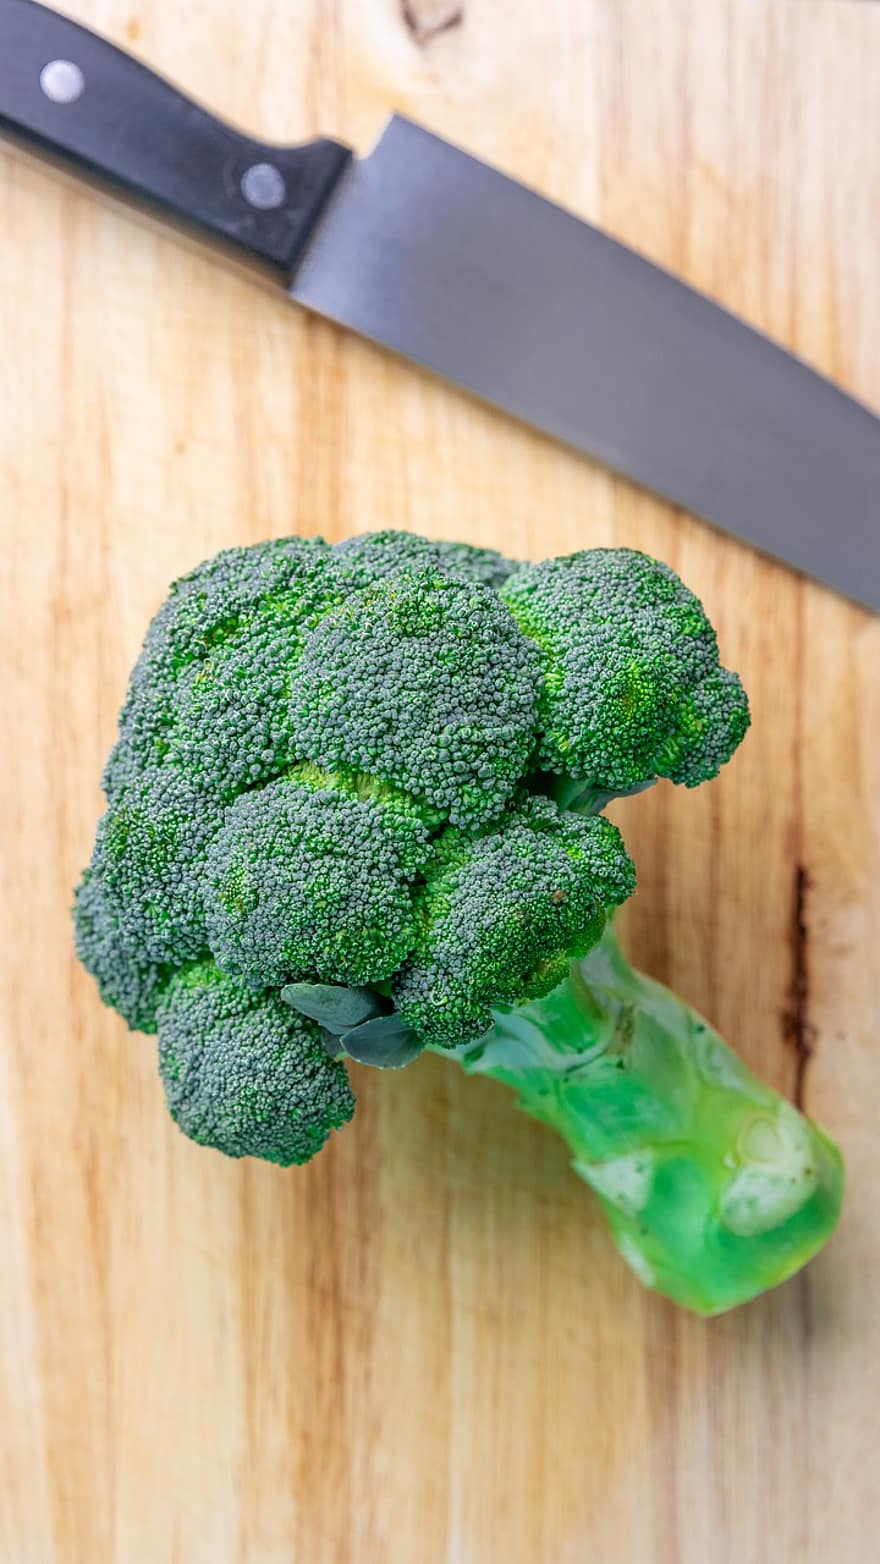 broccoli, grøntsag, sund og rask, rå, organisk, vegetarisk, ernæring